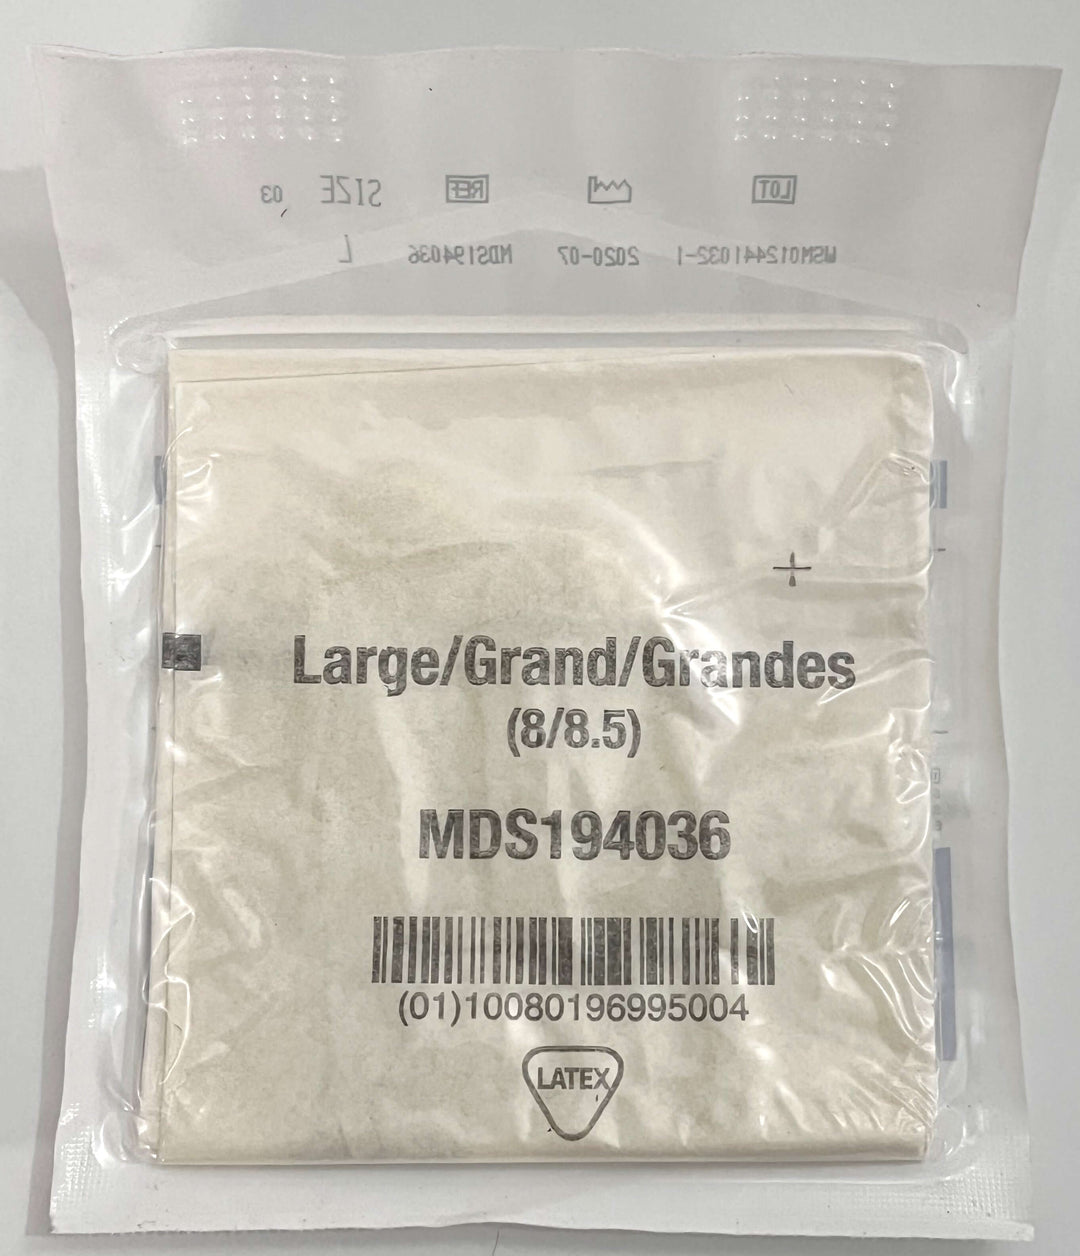 Medline MDS194036, Sterile Procedure Exam Gloves, Large, (50-Pairs)